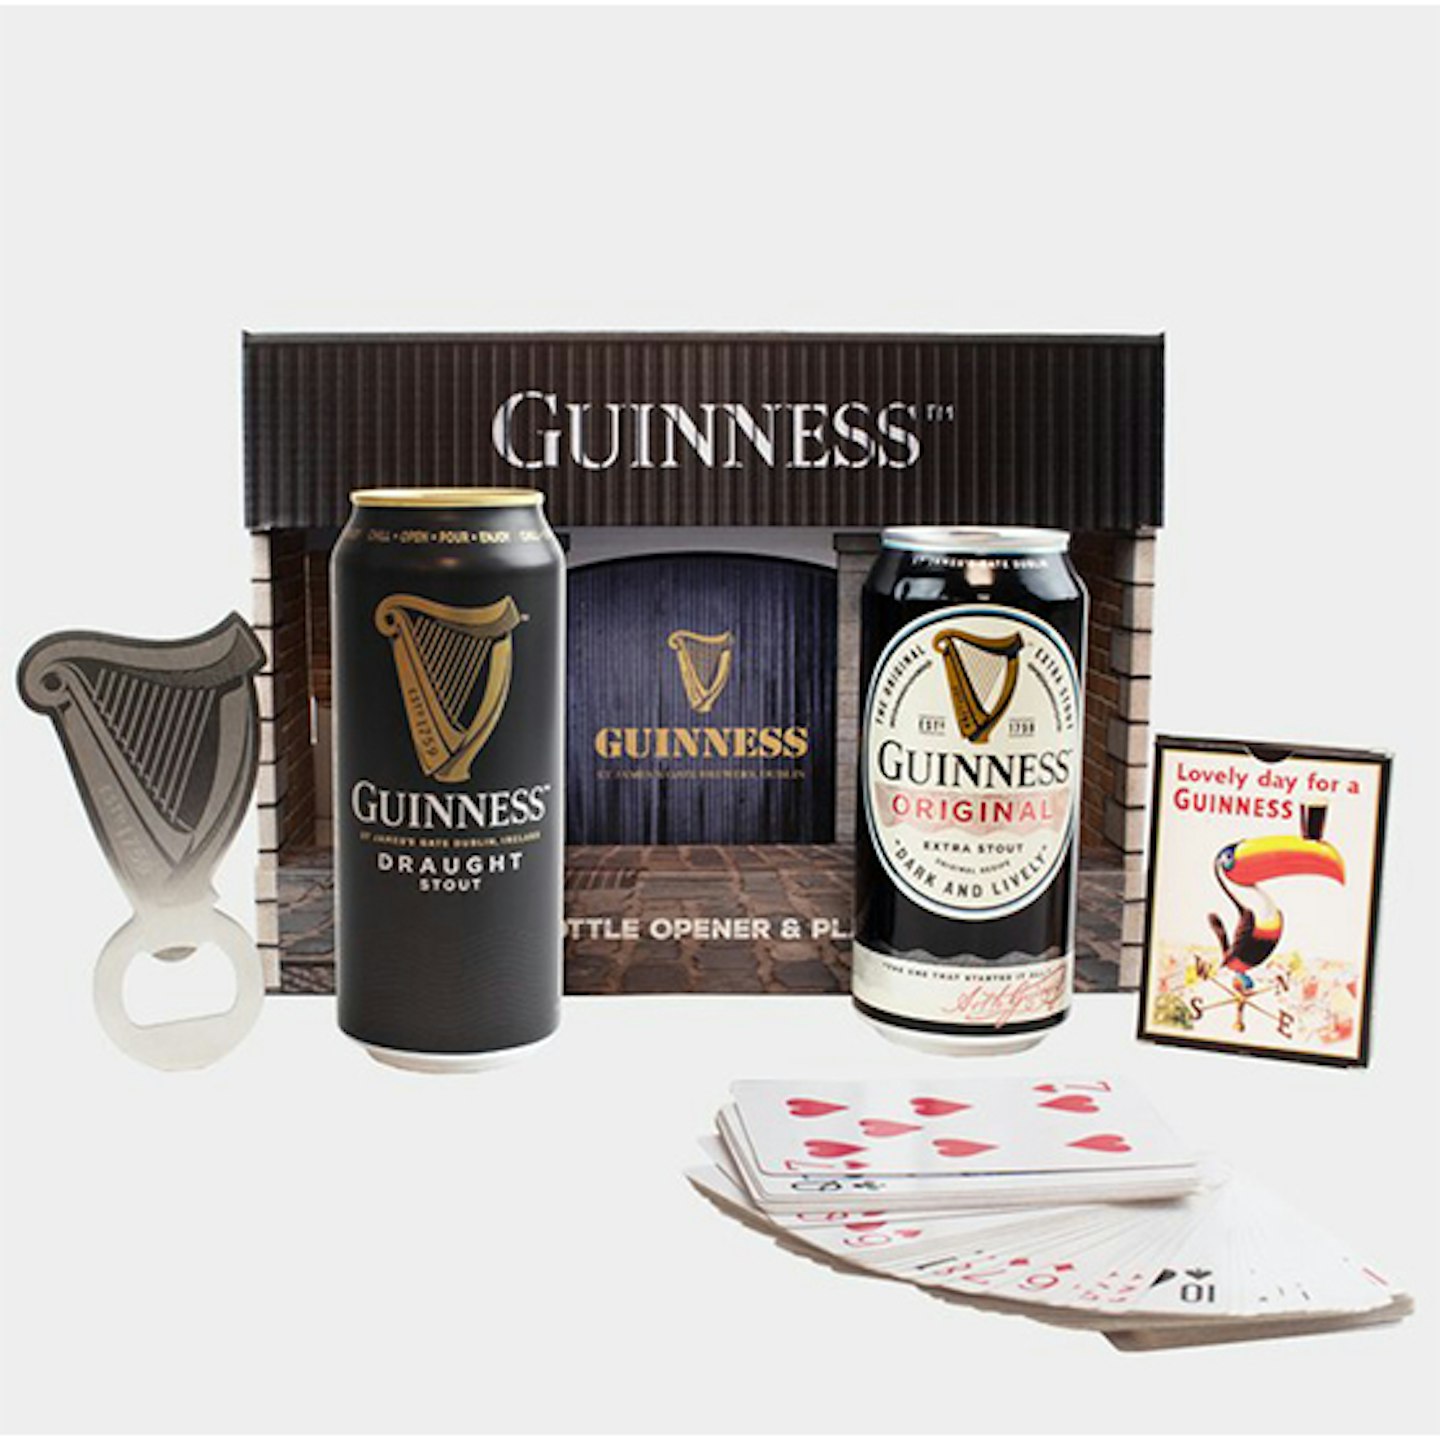 Guinness pub in a box